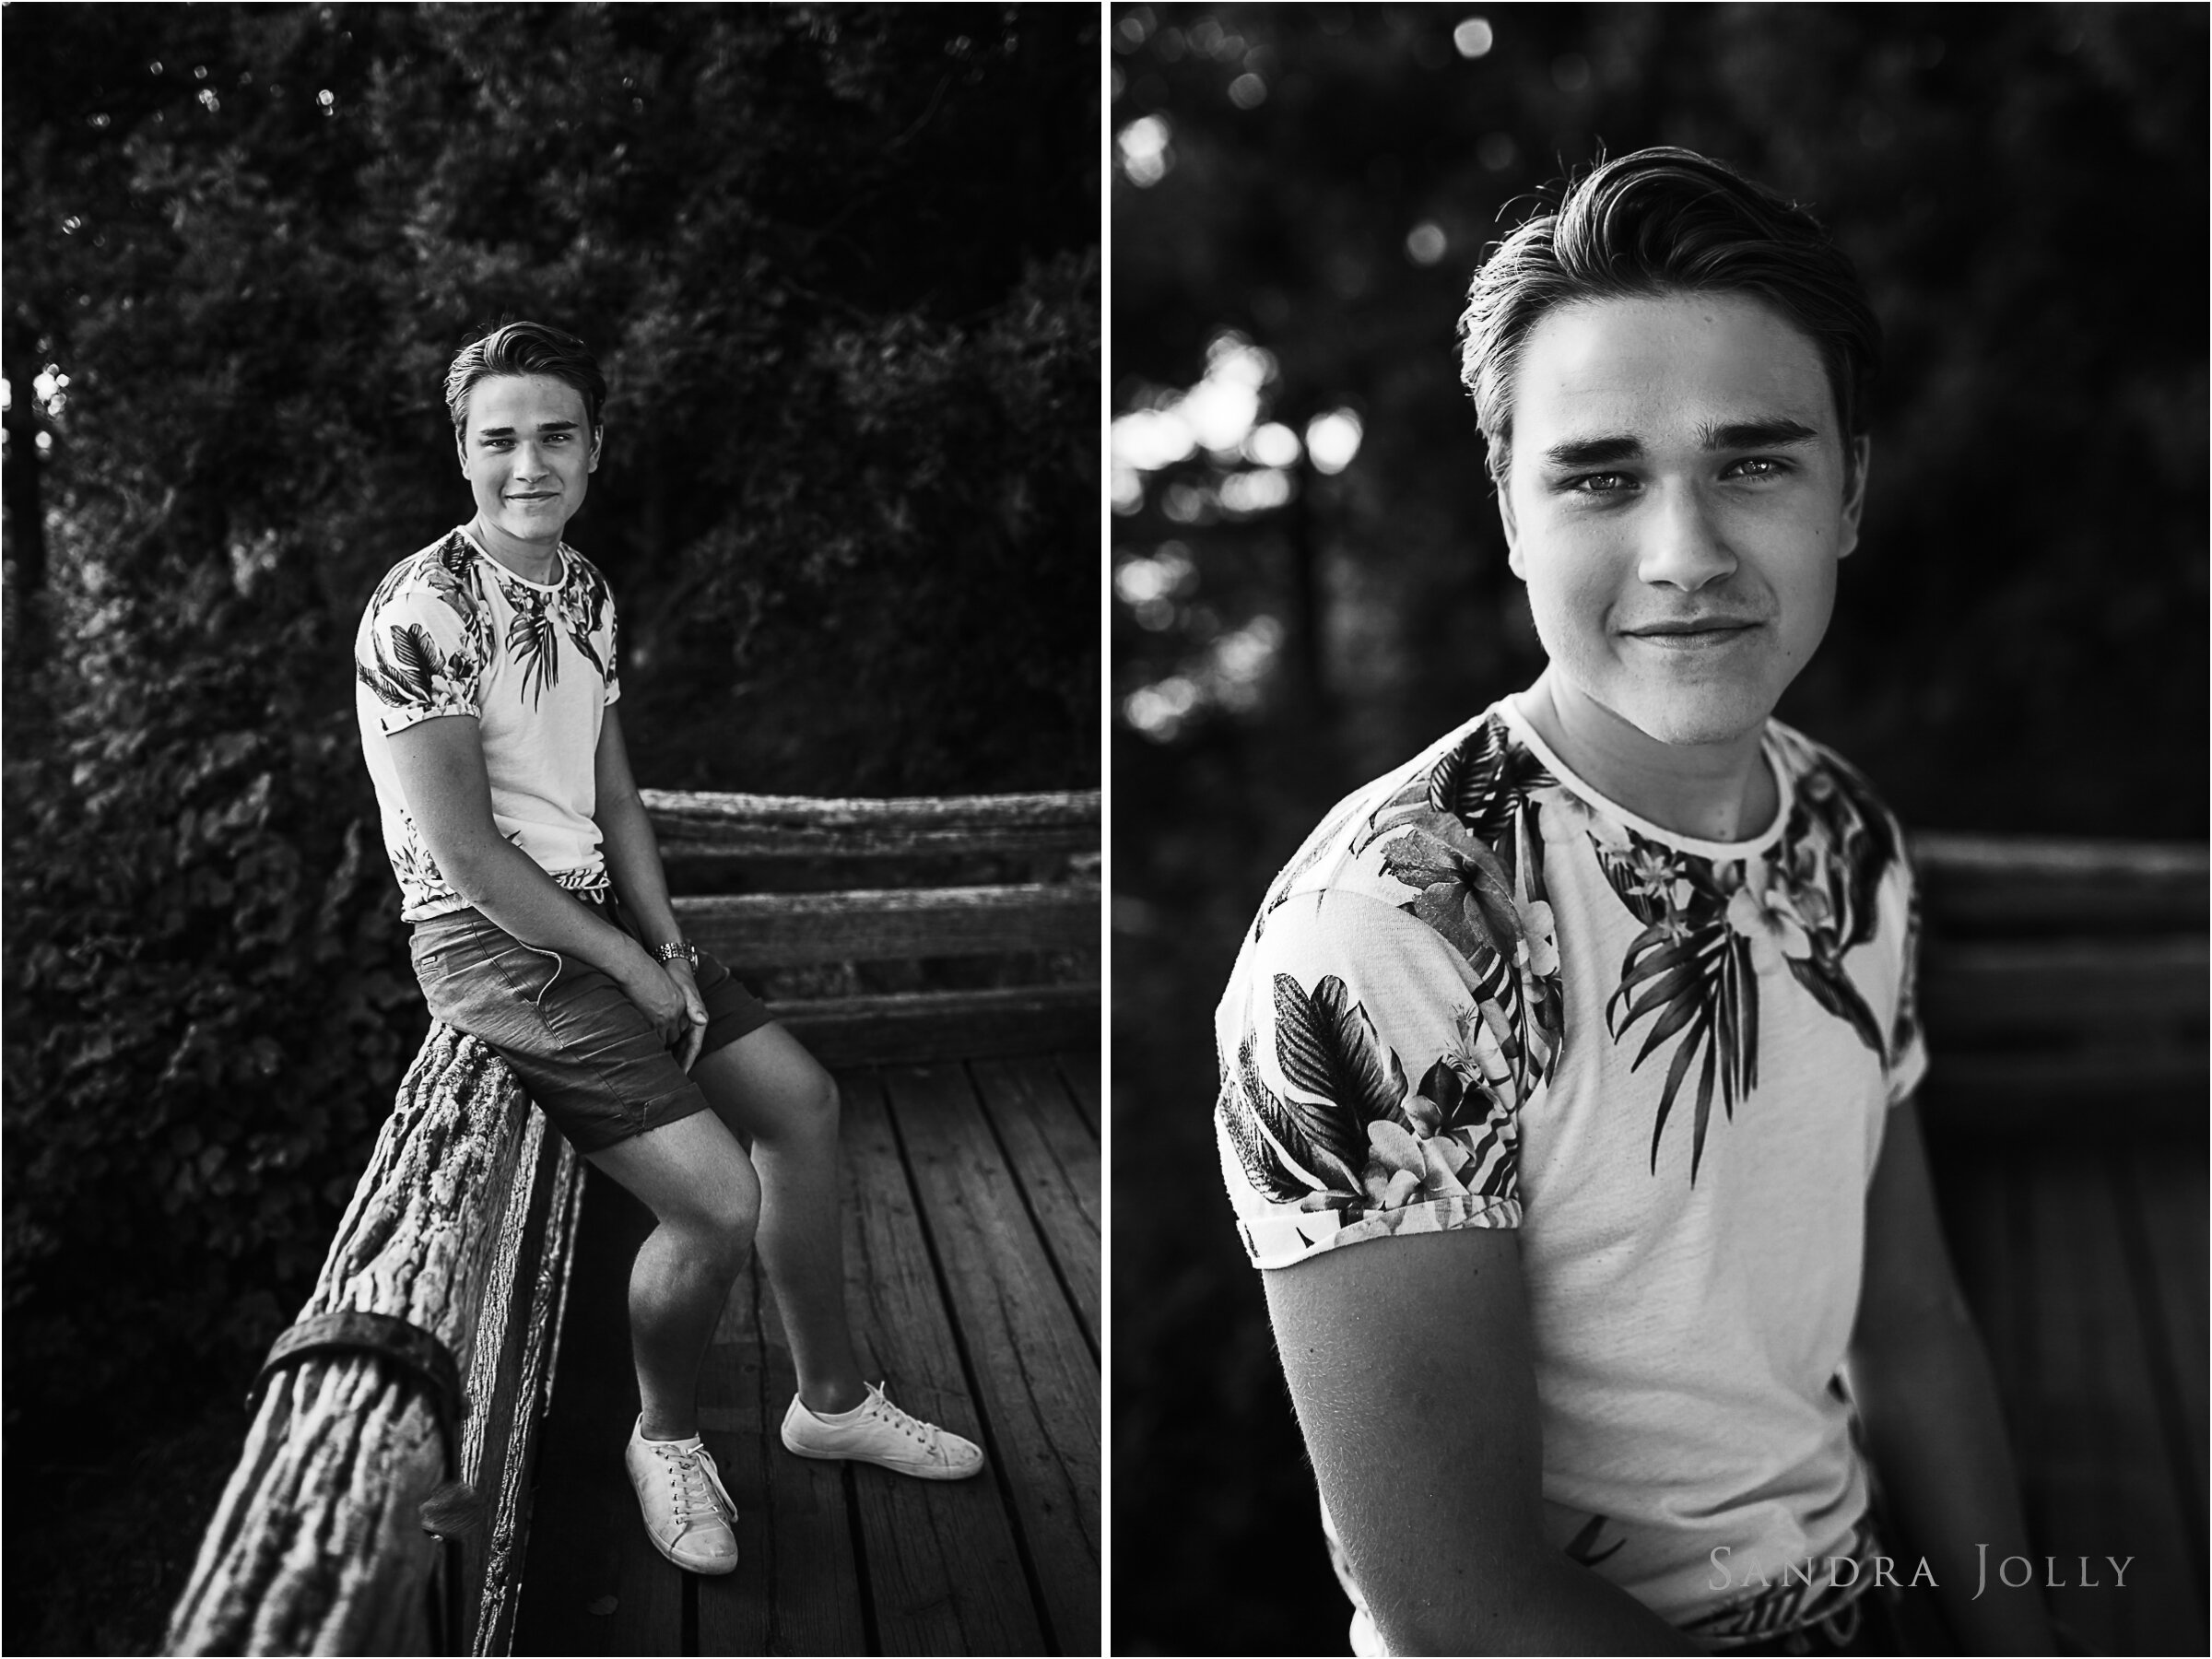 portrait-of-handsome-teenage-boy-by-stockholm-portrait-photographer-sandra-jolly.jpg